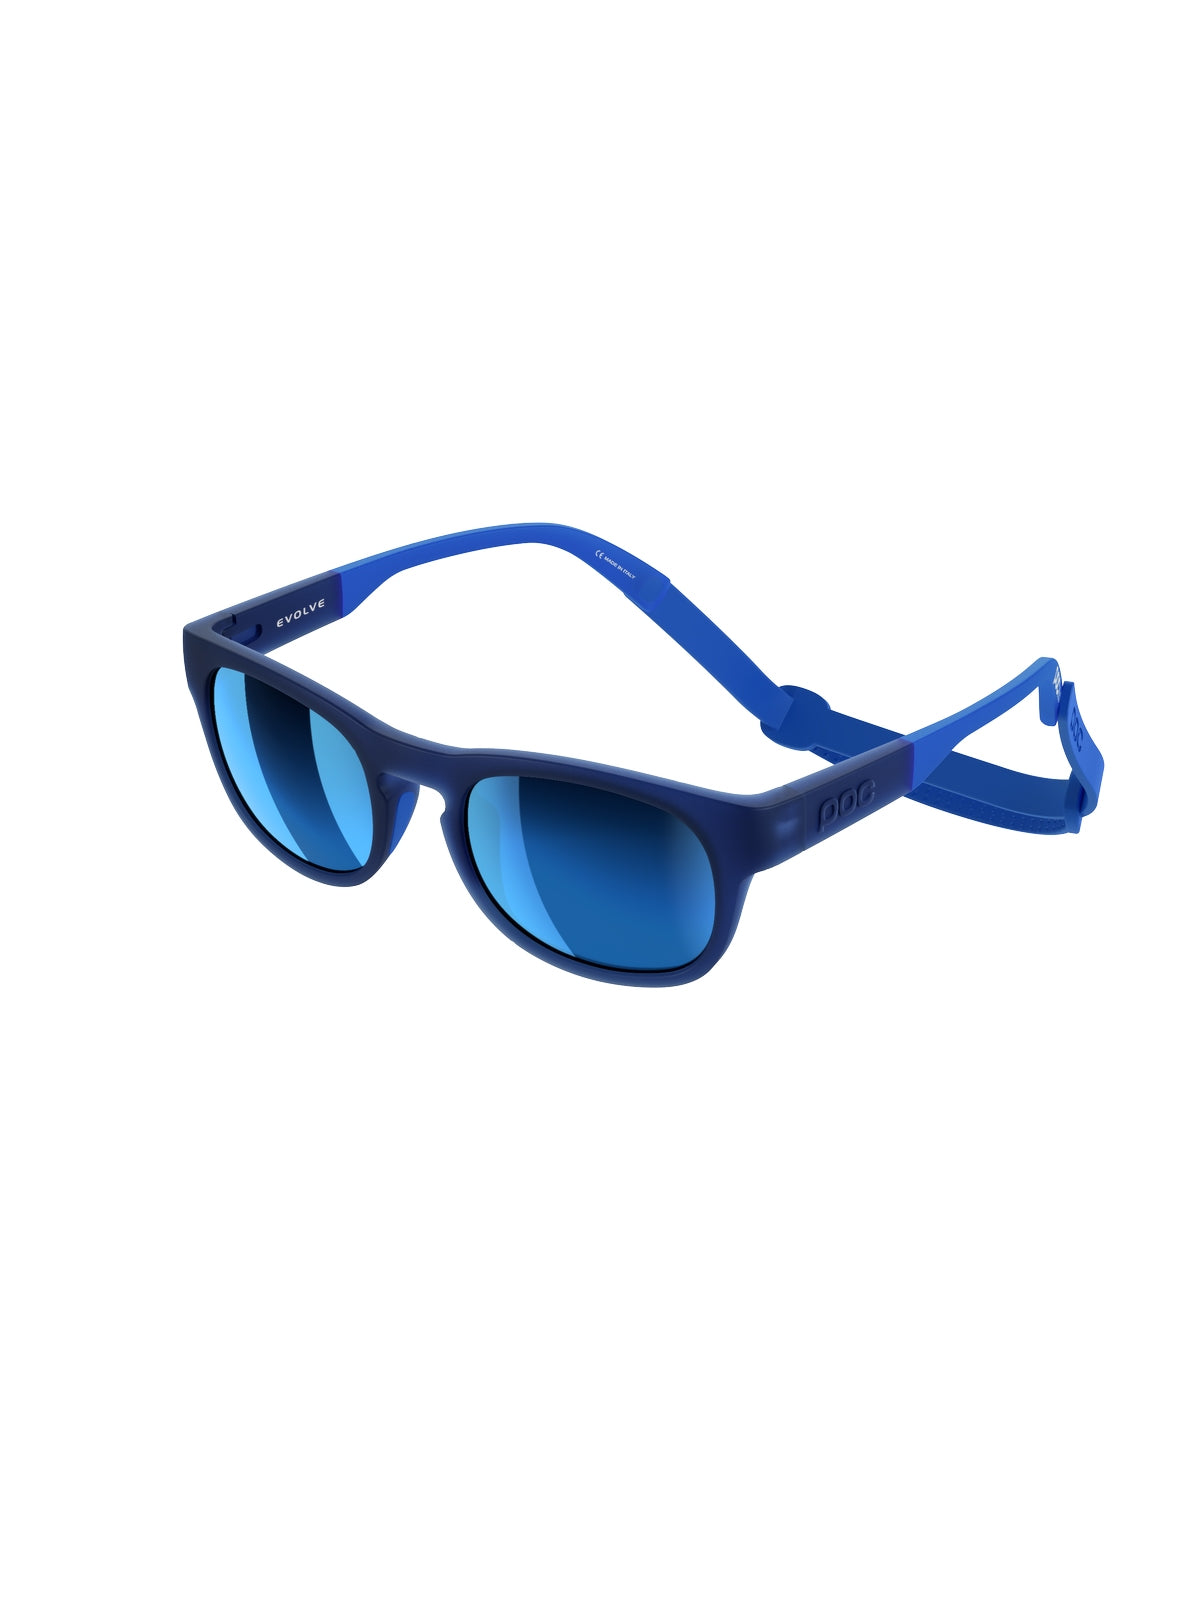 Okulary przeciwsłoneczne POCito Evolve - Lead Blue/Fluo. Blue